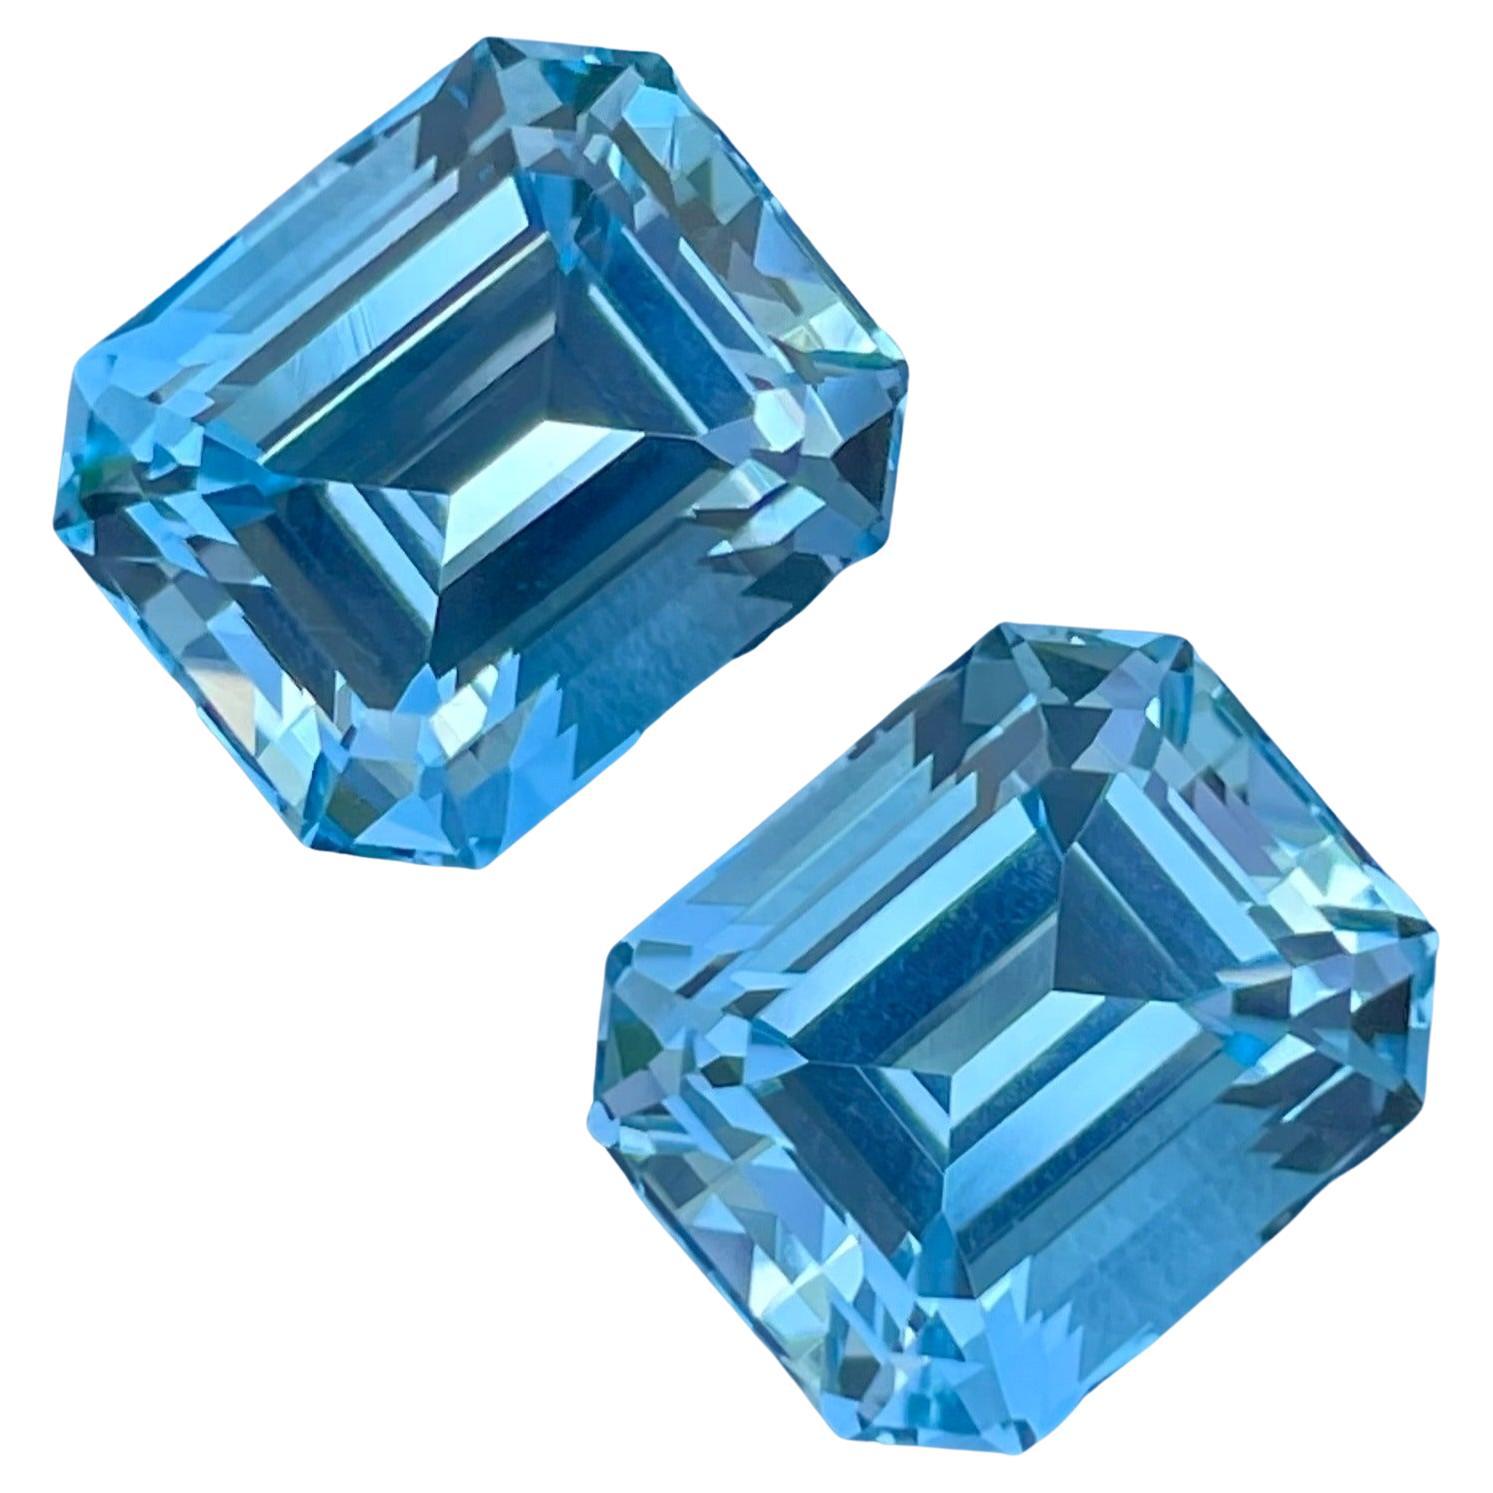 Adorable Swiss Blue Topaz Pair 20.65 carats Emerald Cut Natural Madagascar's Gem For Sale